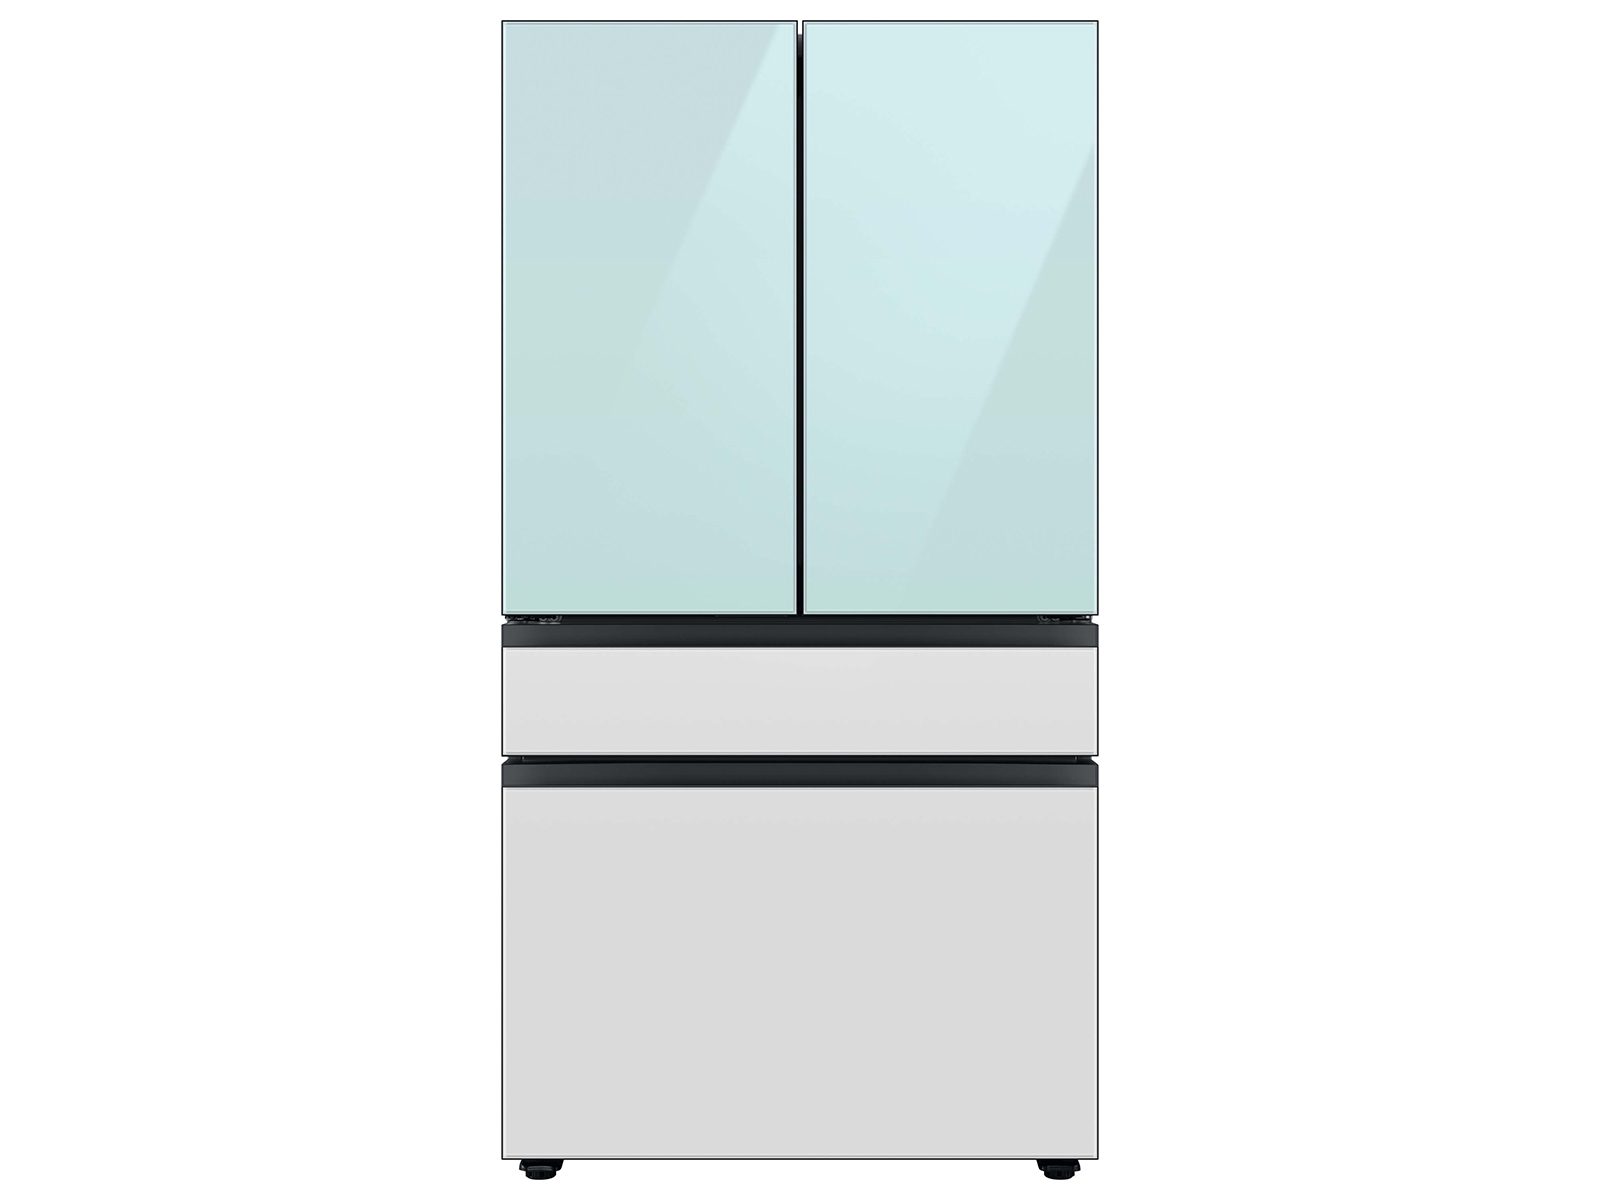 Samsung Bespoke 4-Door French Door Refrigerator (29 cu. ft.) with Beverage Center EPP or other special offers $1609